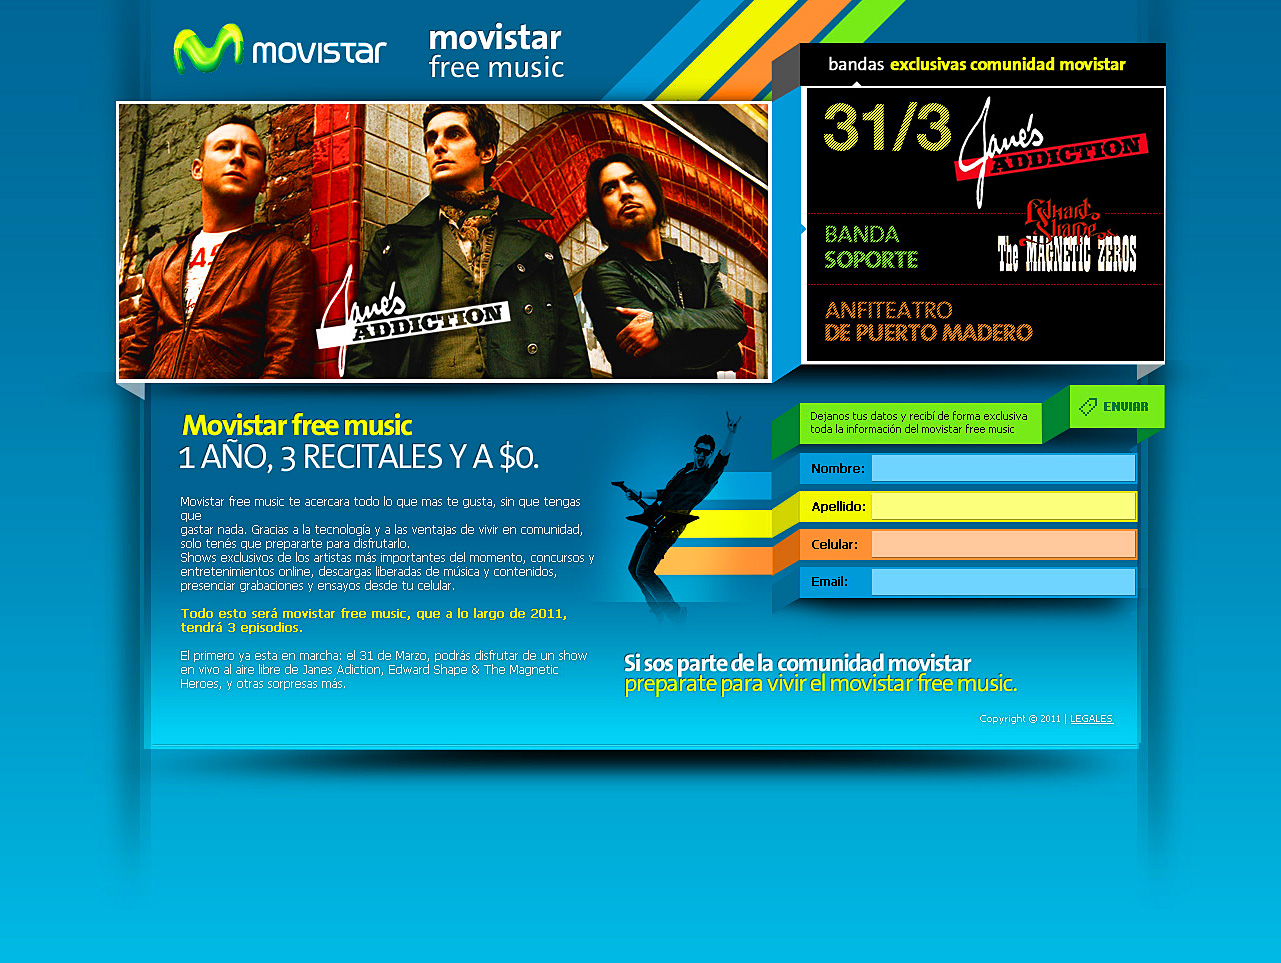 Movistar Free Music